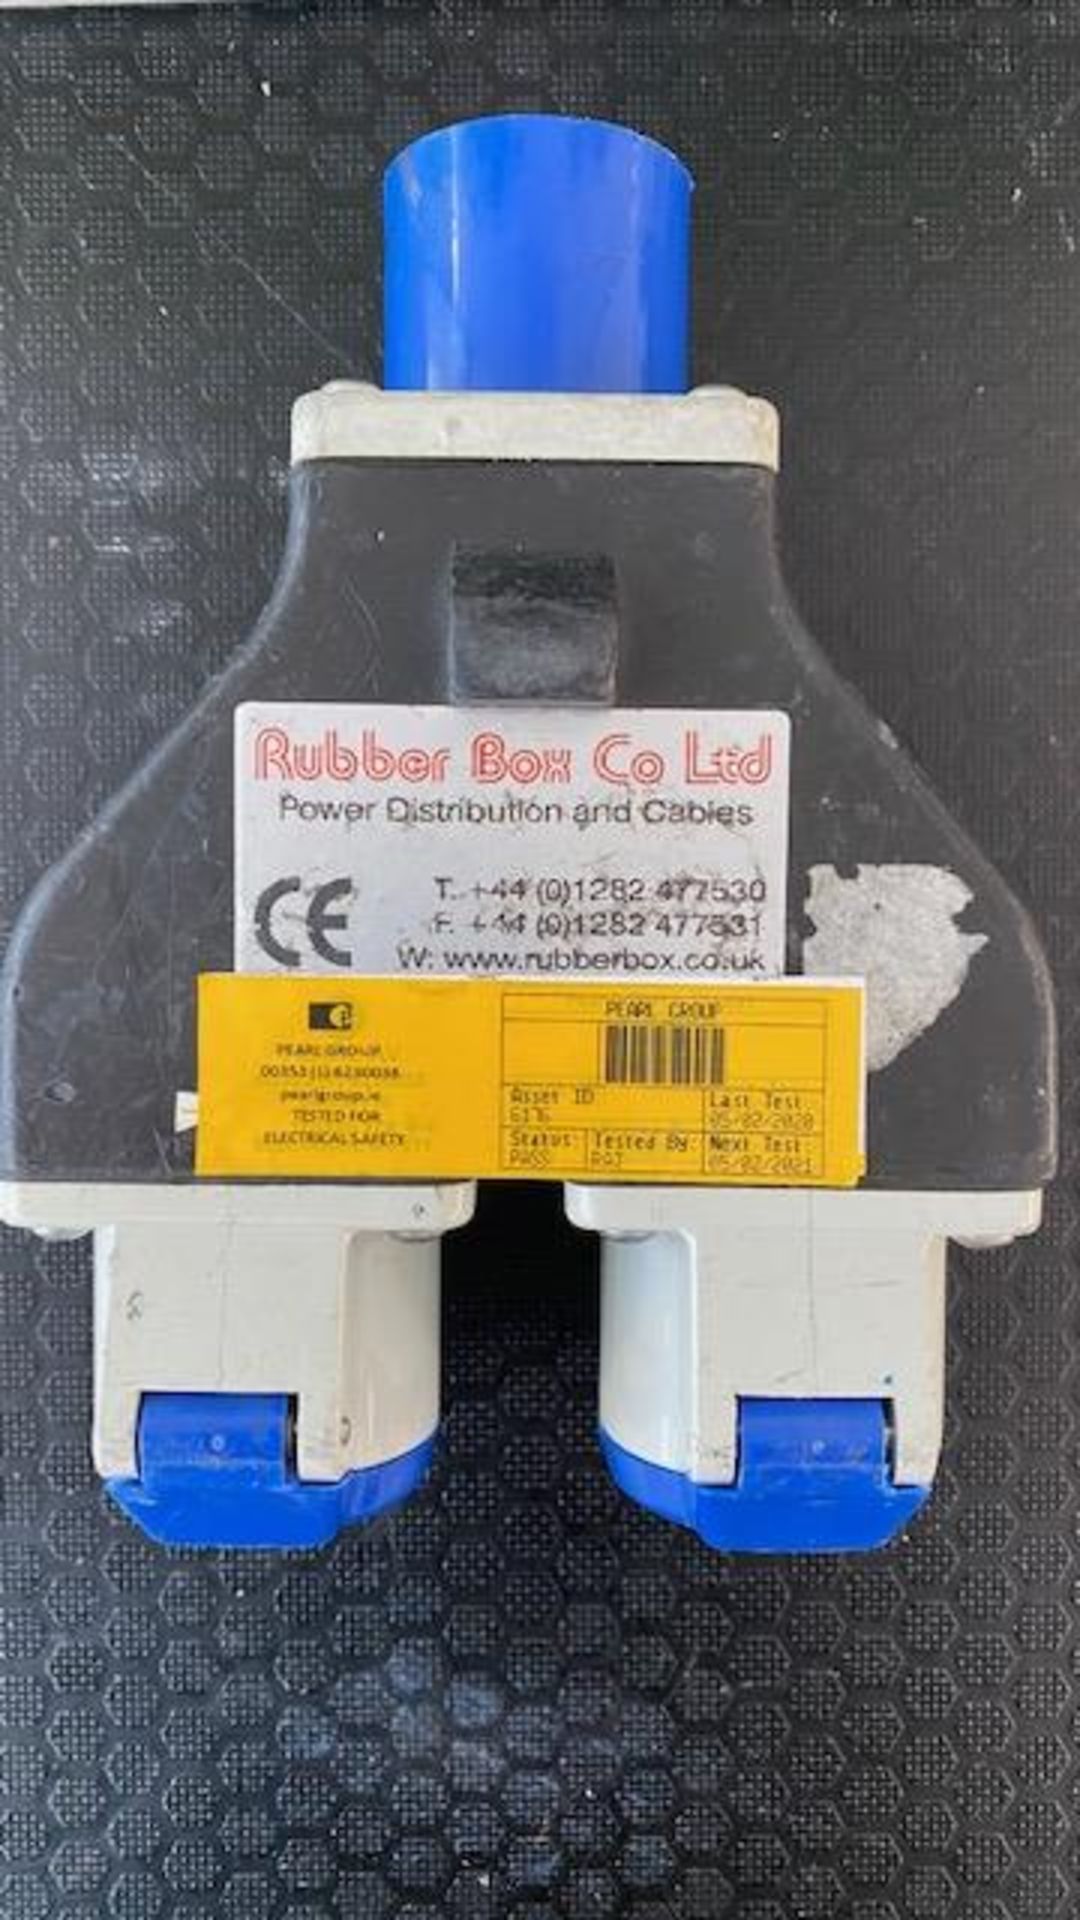 14 x Rubber Box 16A 2 Way Splitter - Ref: 868 - CL581 - Location: Altrincham WA14 - Image 3 of 3